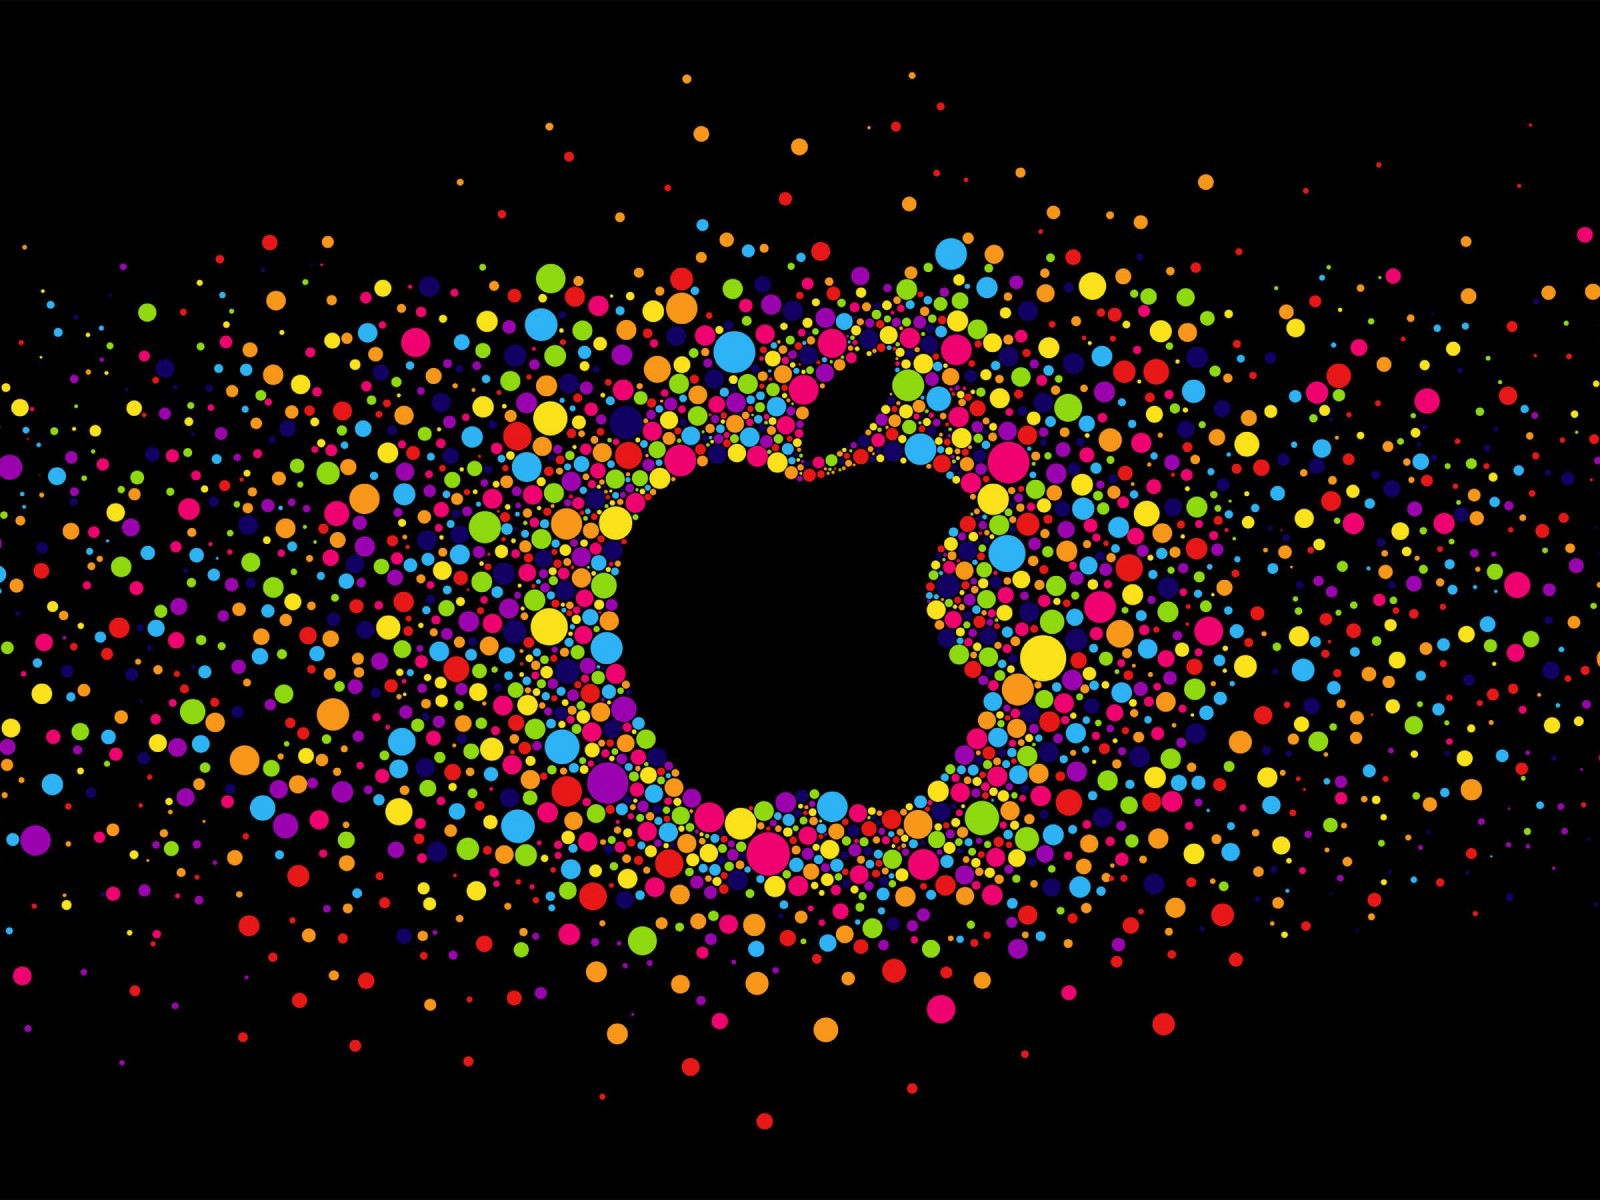 Black Apple Logo Particles Wallpaper for Desktop 1600x1200